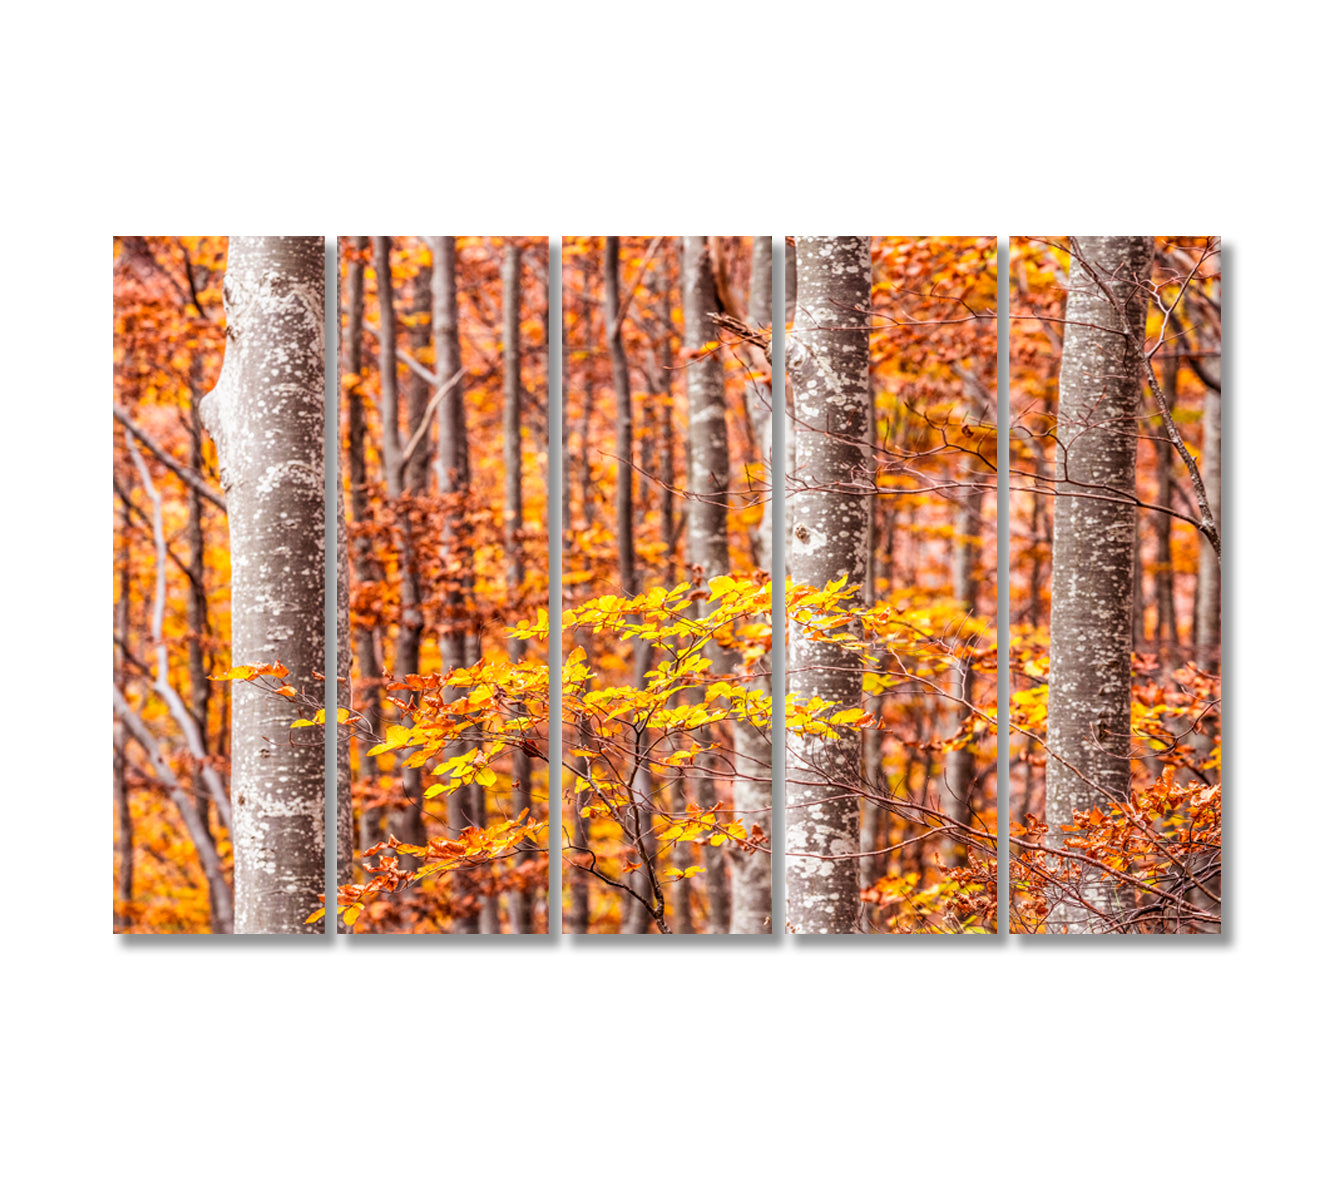 Autumn Beech Trees Forest Bologna Italy Canvas Print-Canvas Print-CetArt-5 Panels-36x24 inches-CetArt